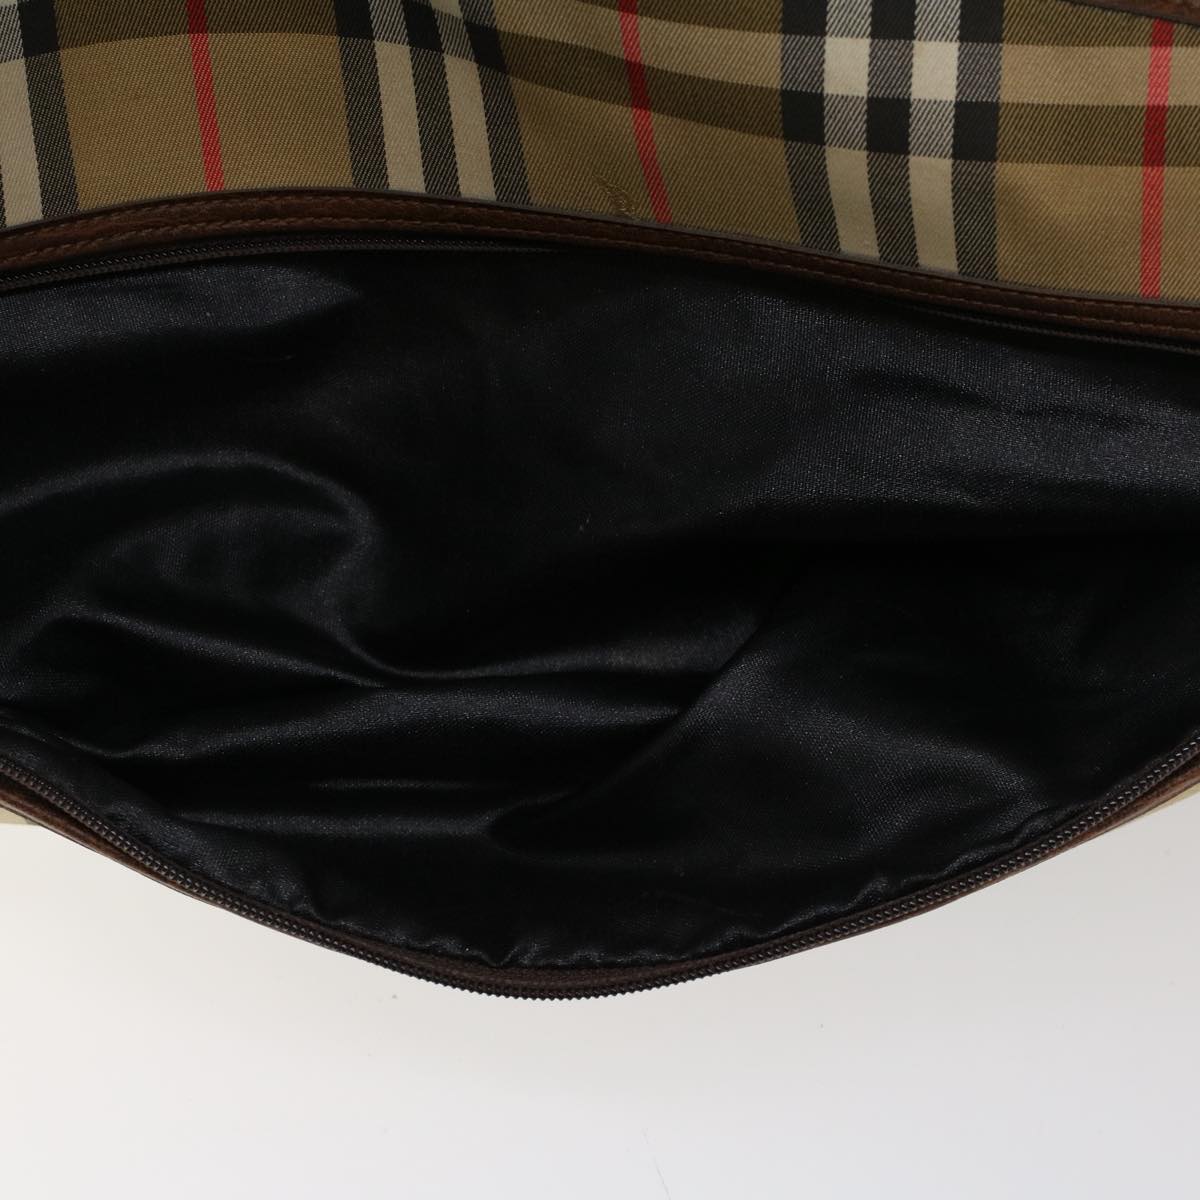 Burberrys Nova Check Boston Bag Nylon Leather Beige Auth tb685